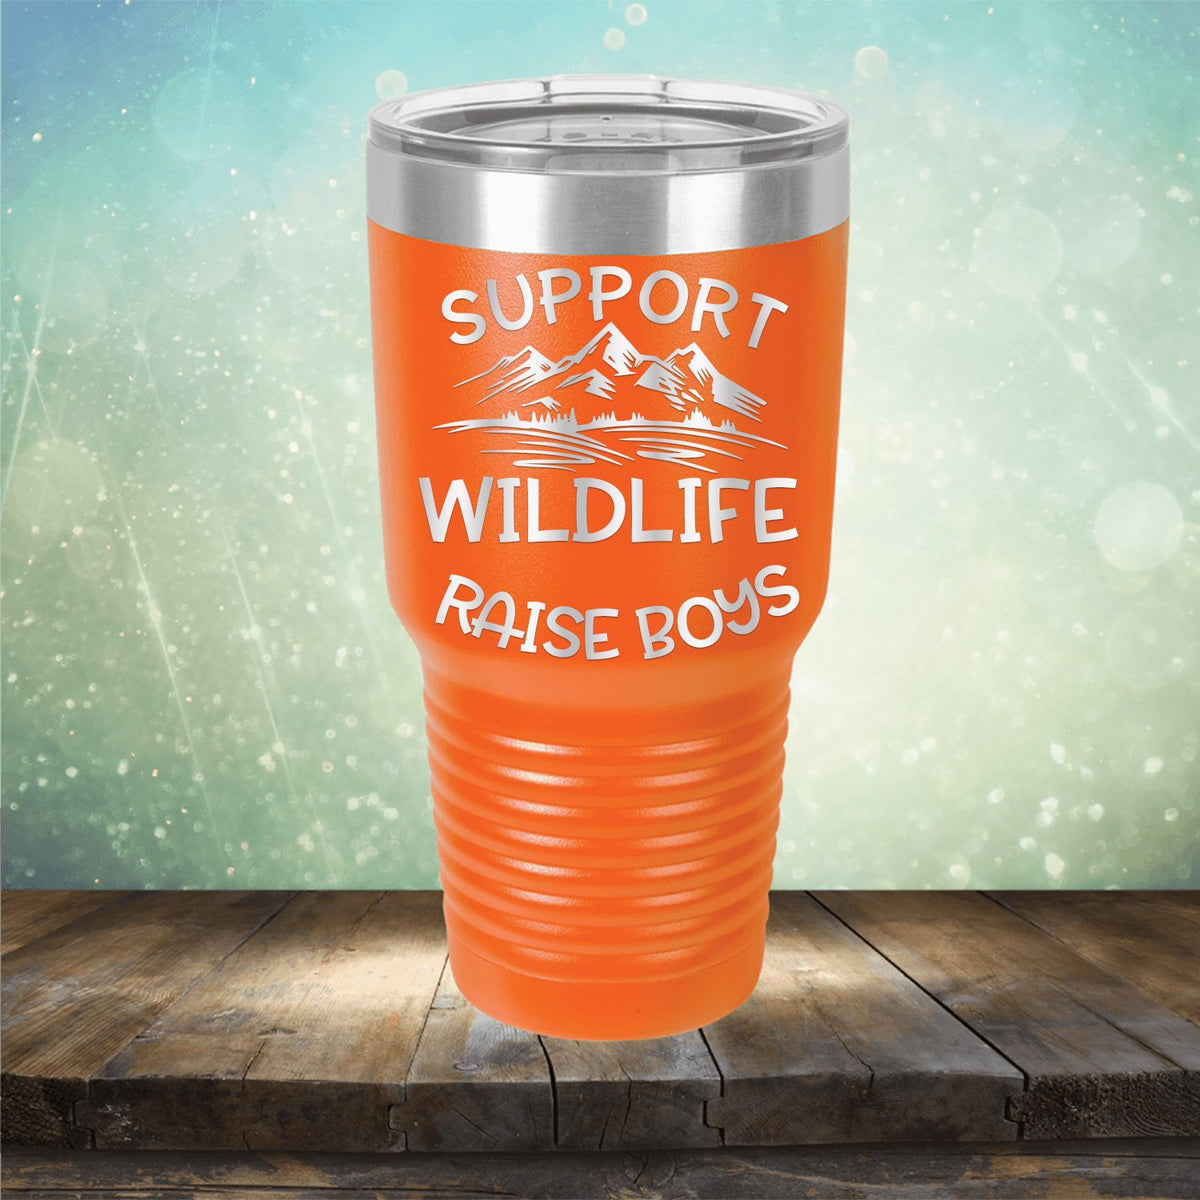 Support Wildlife Raise Boys